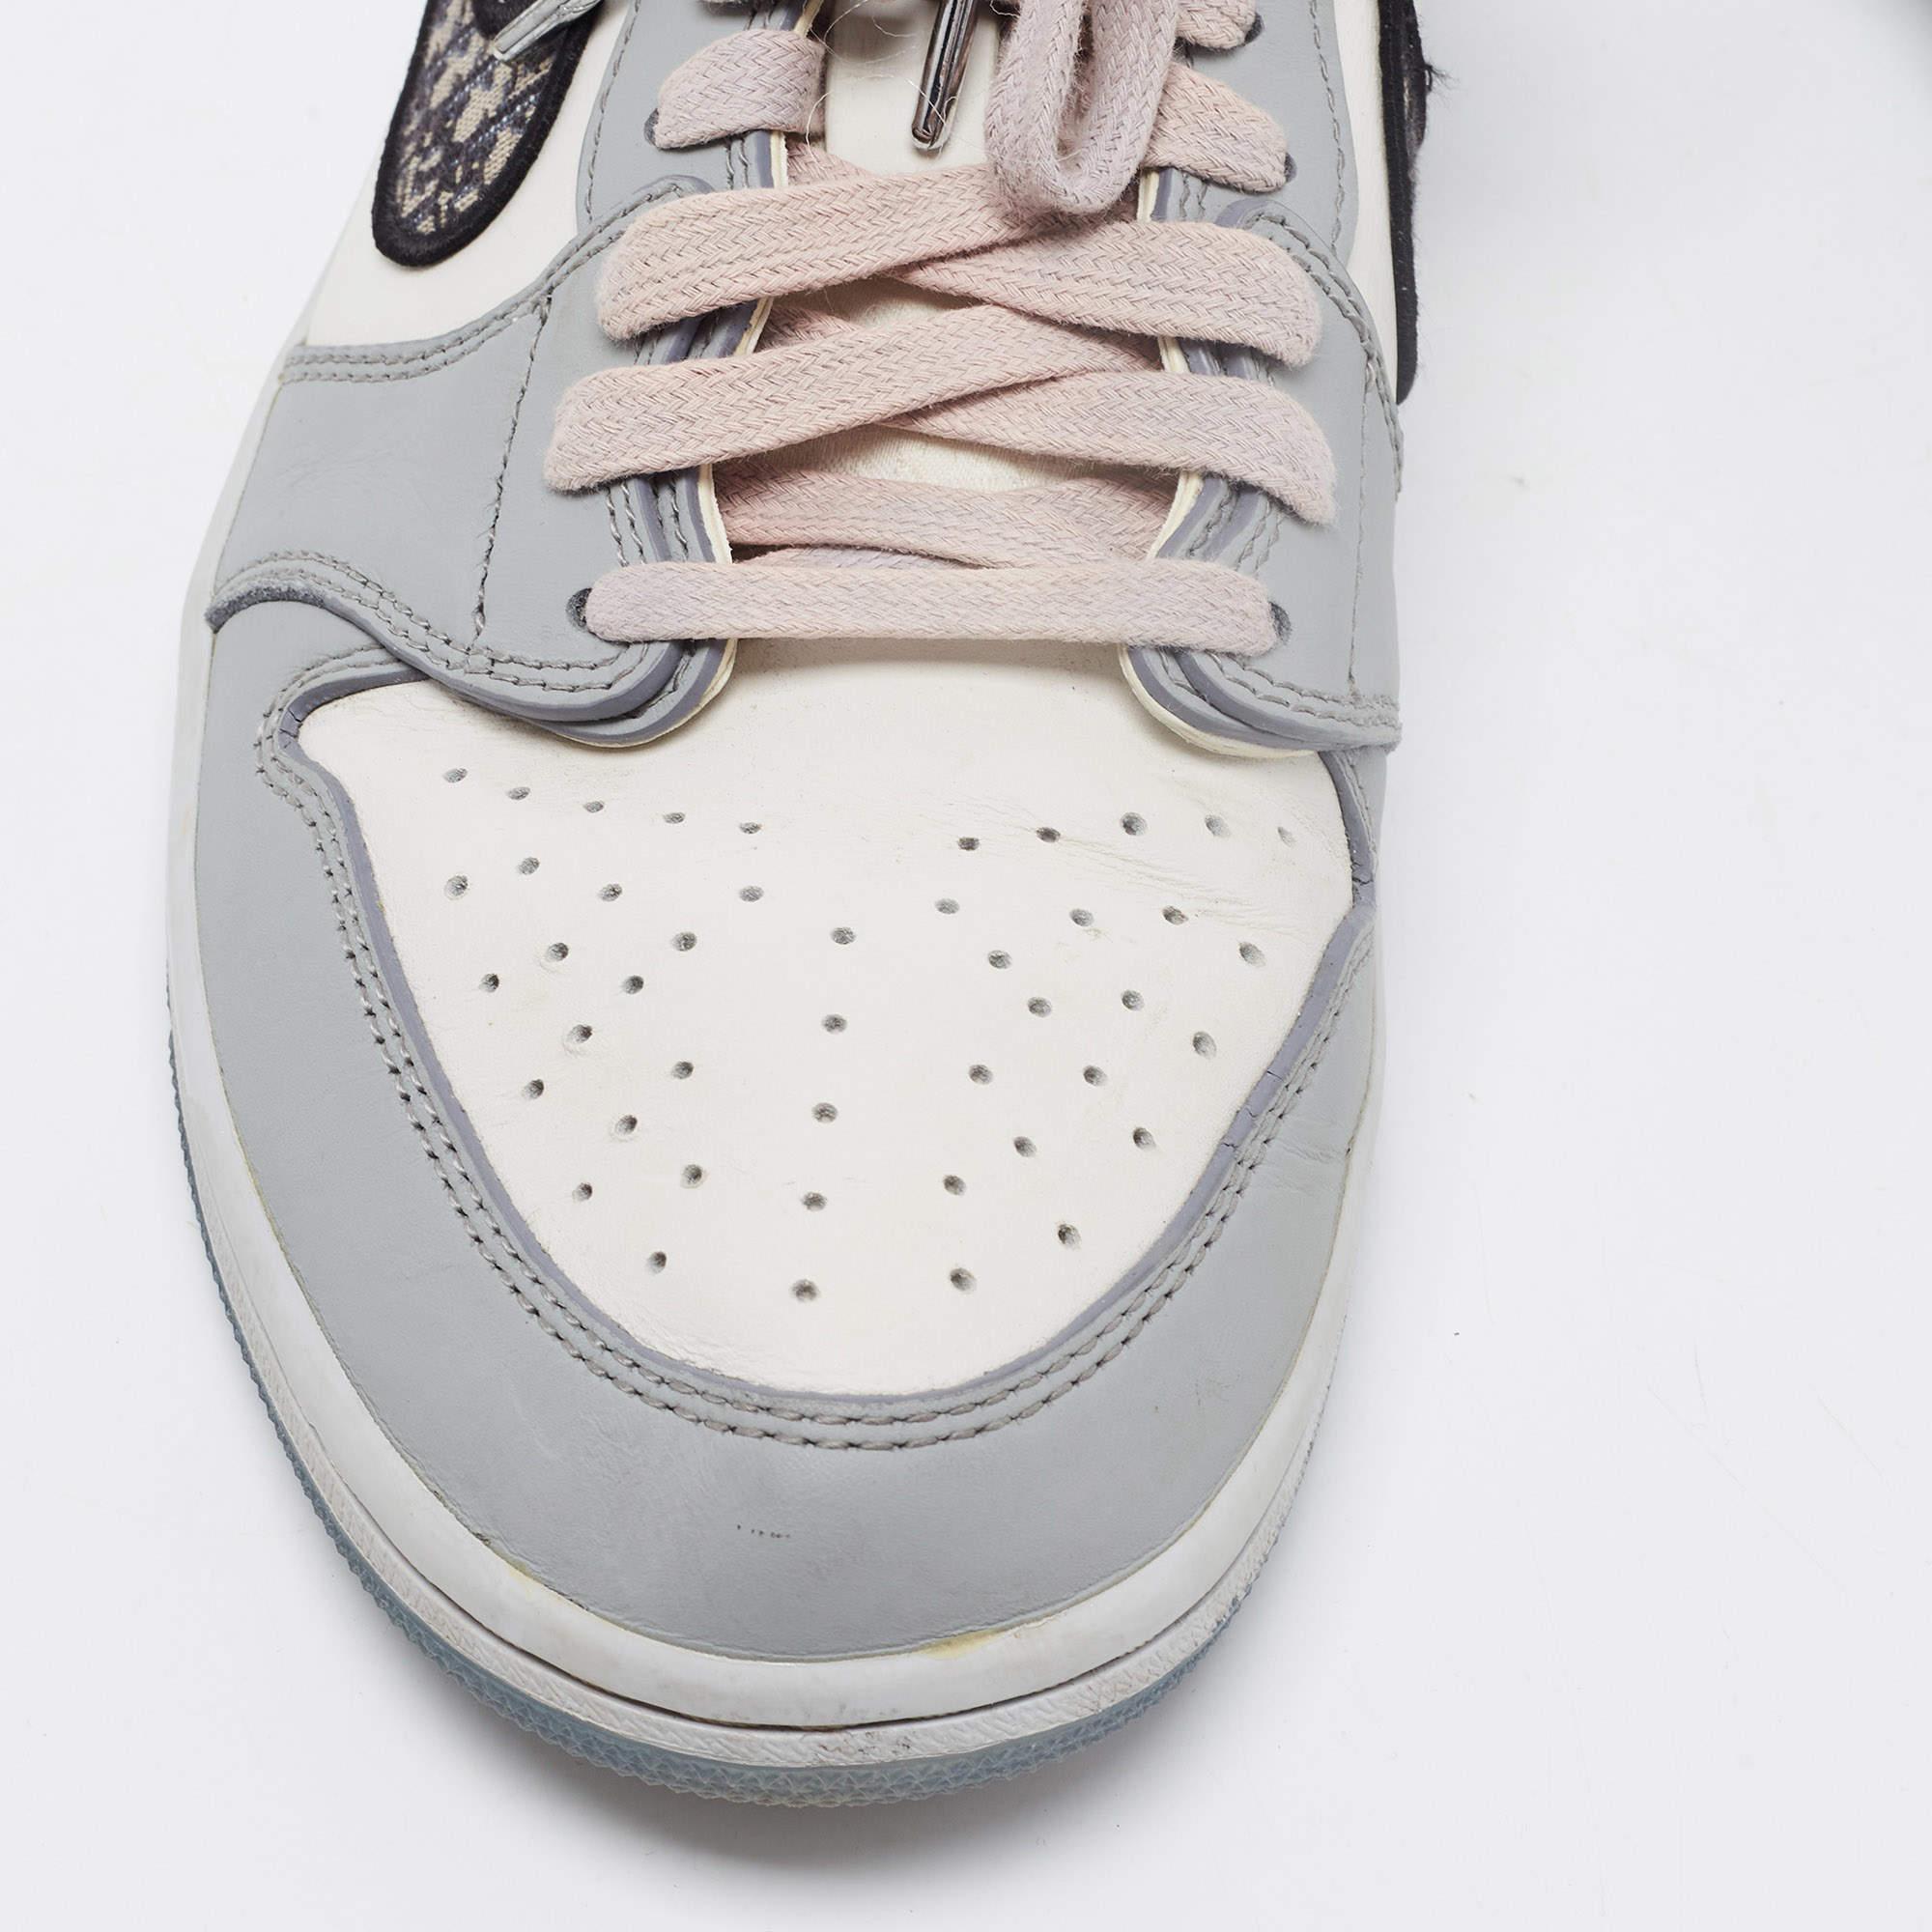 Dior x Jordan Grey/White Leather Jordan 1 Low Top Sneakers Size 44 4